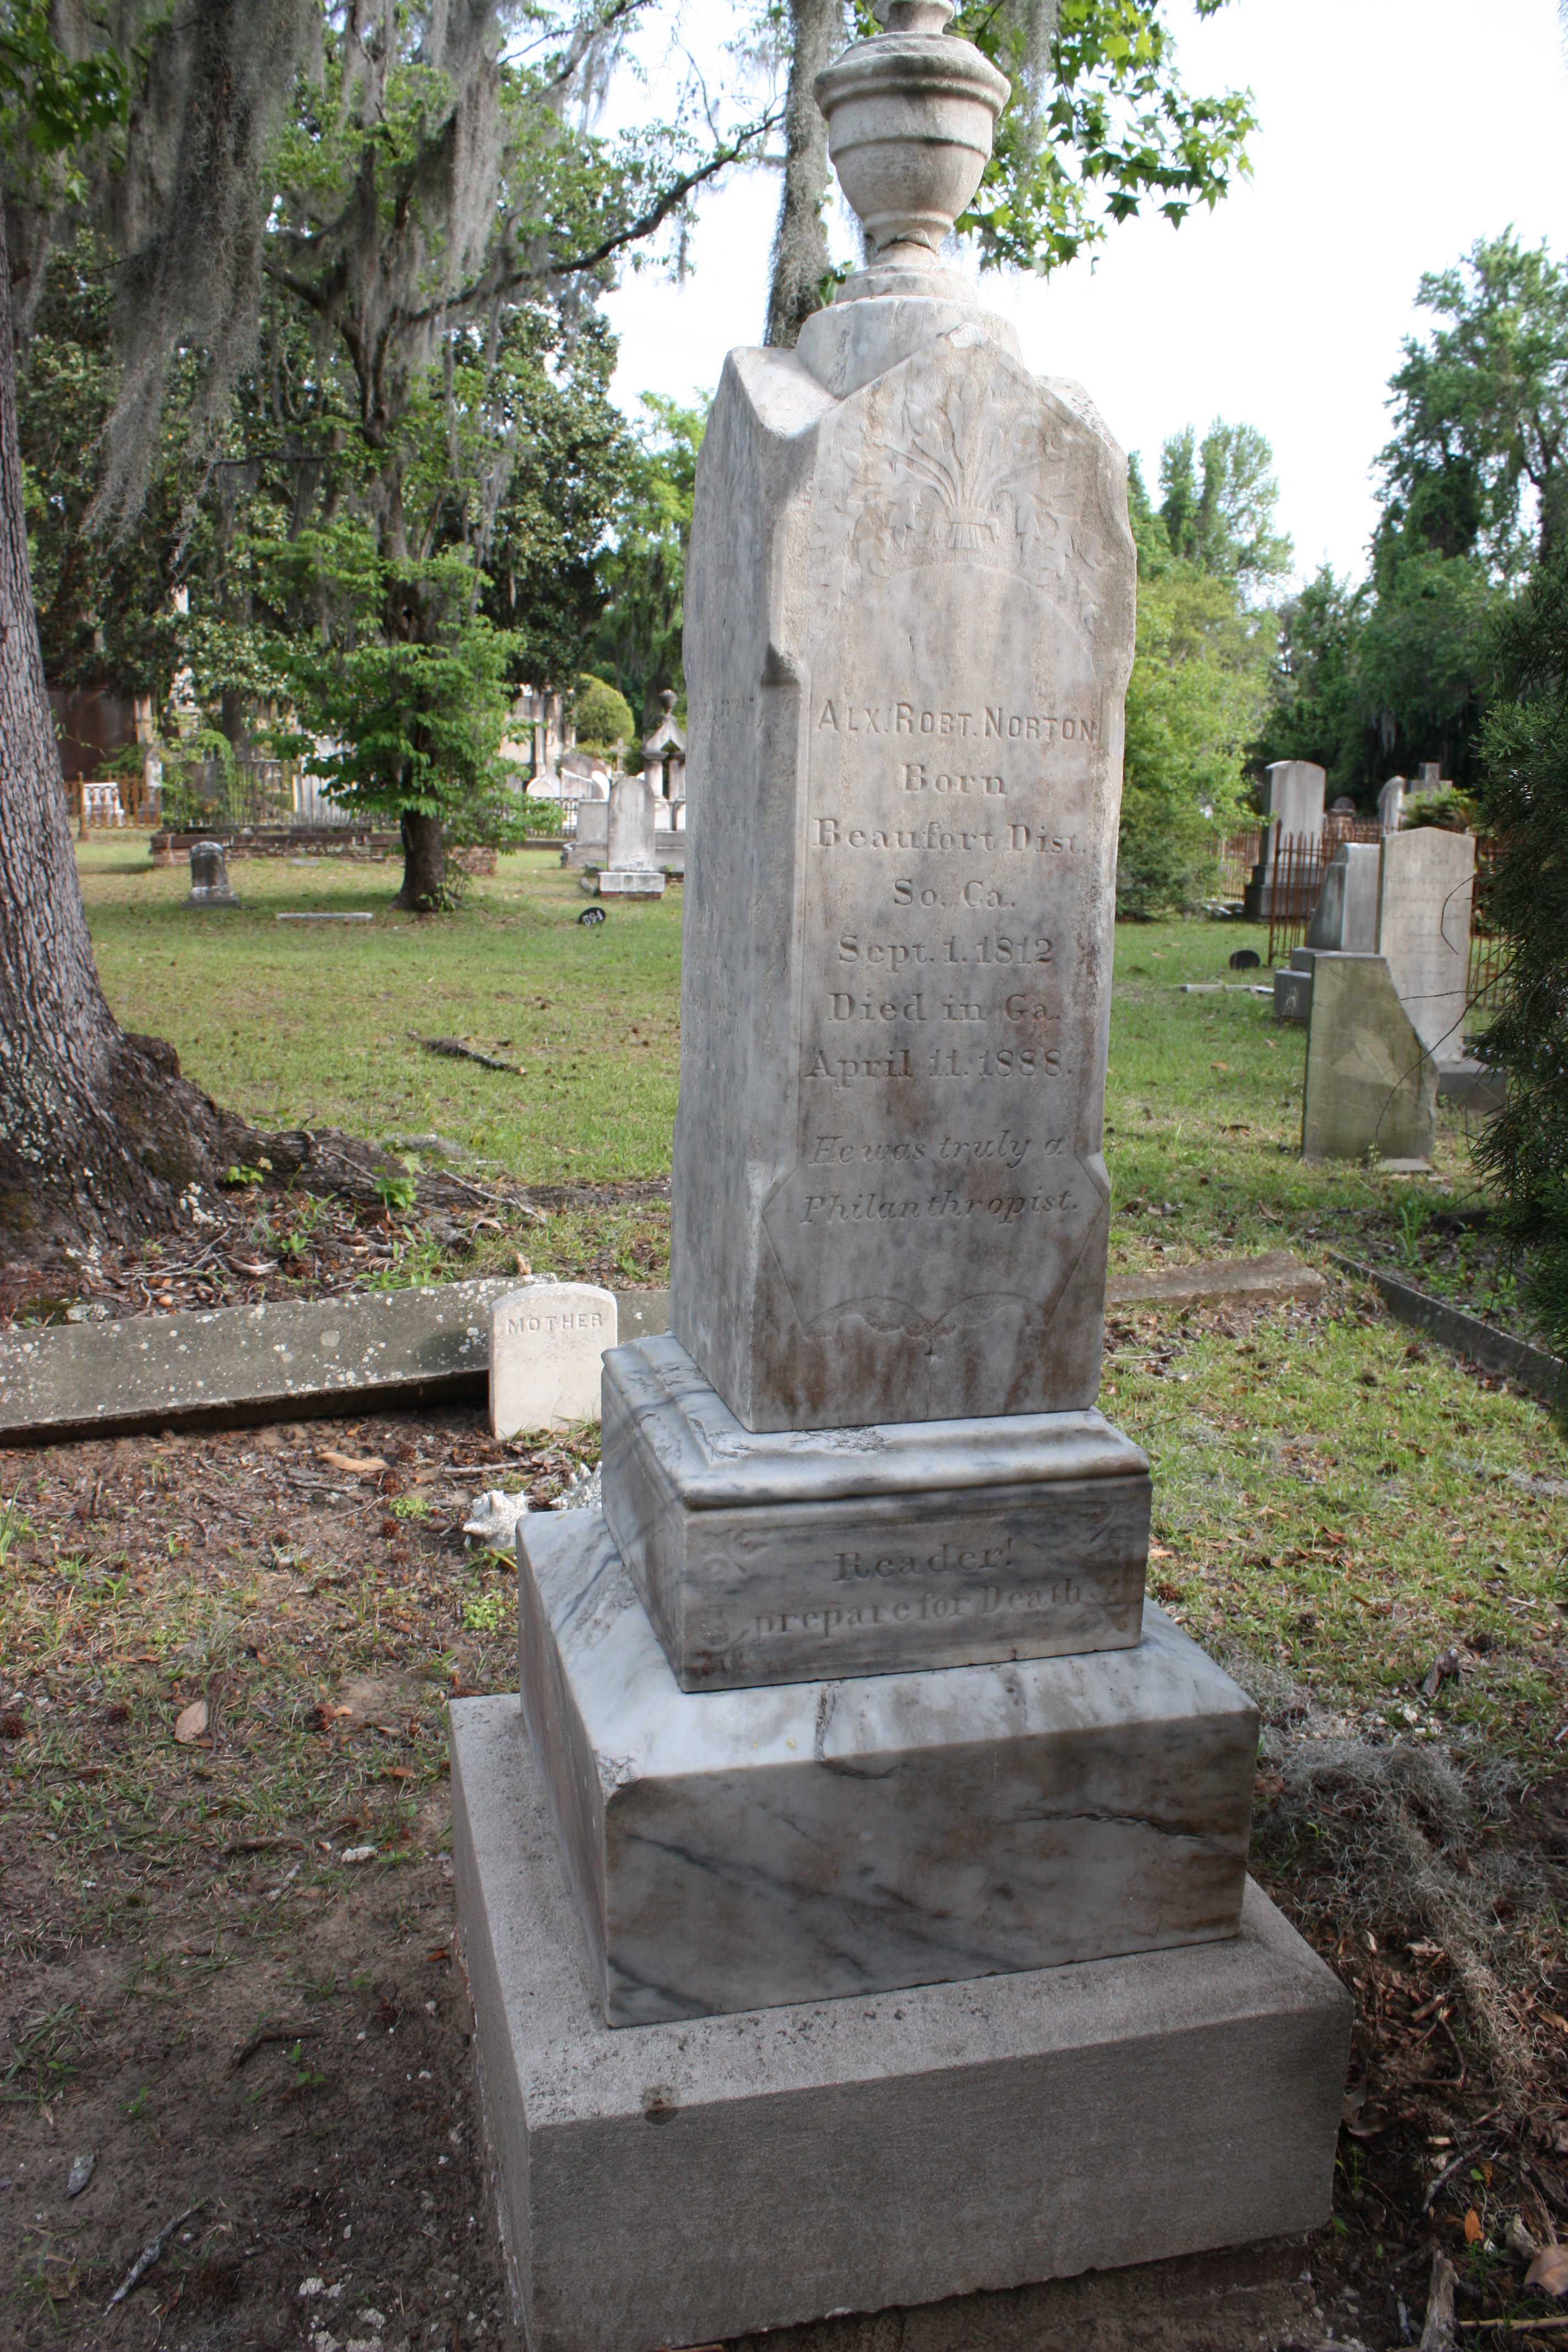 Grave of Alexander Robert Norton, 1812-1888, Laurel Grove Cemetery, Savannah Georgia.